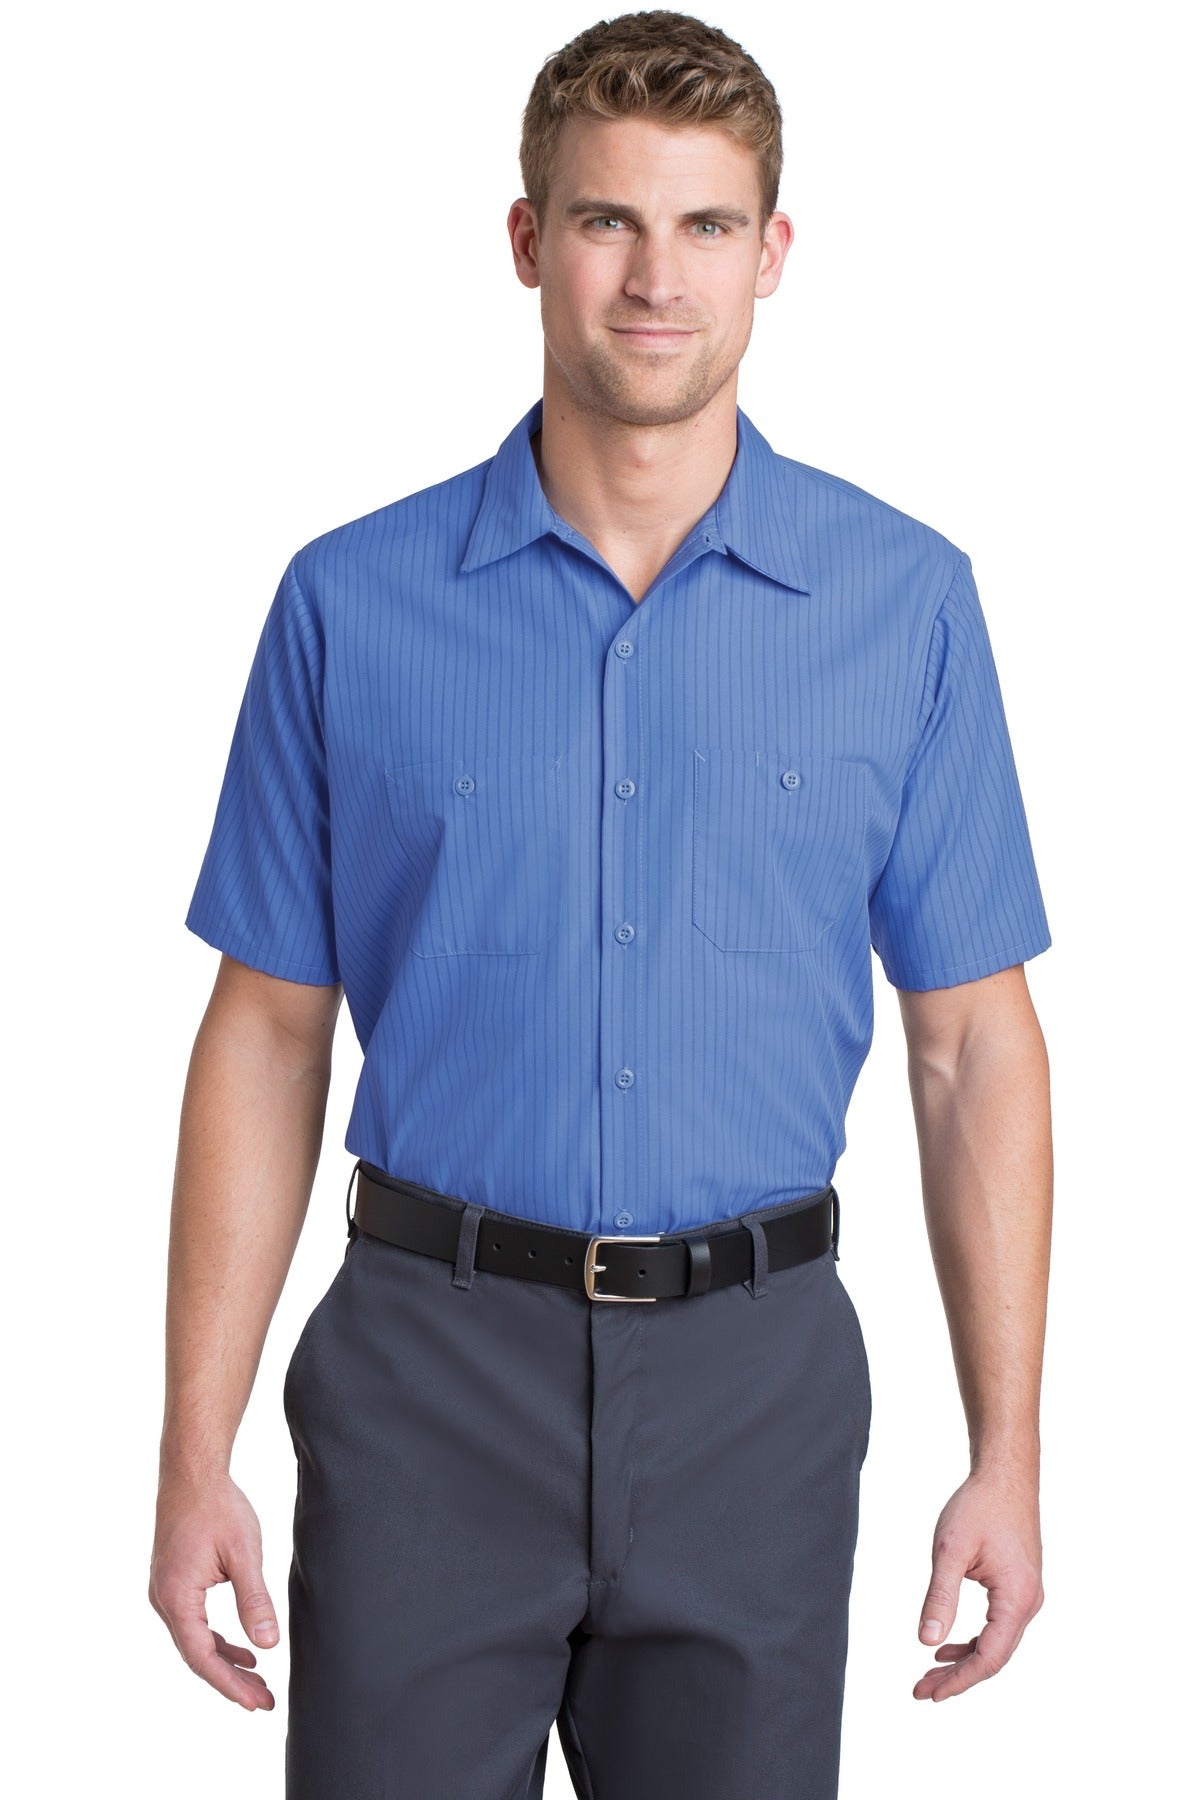 Red Kap® Short Sleeve Striped Industrial Work Shirt. CS20 - DFW Impression